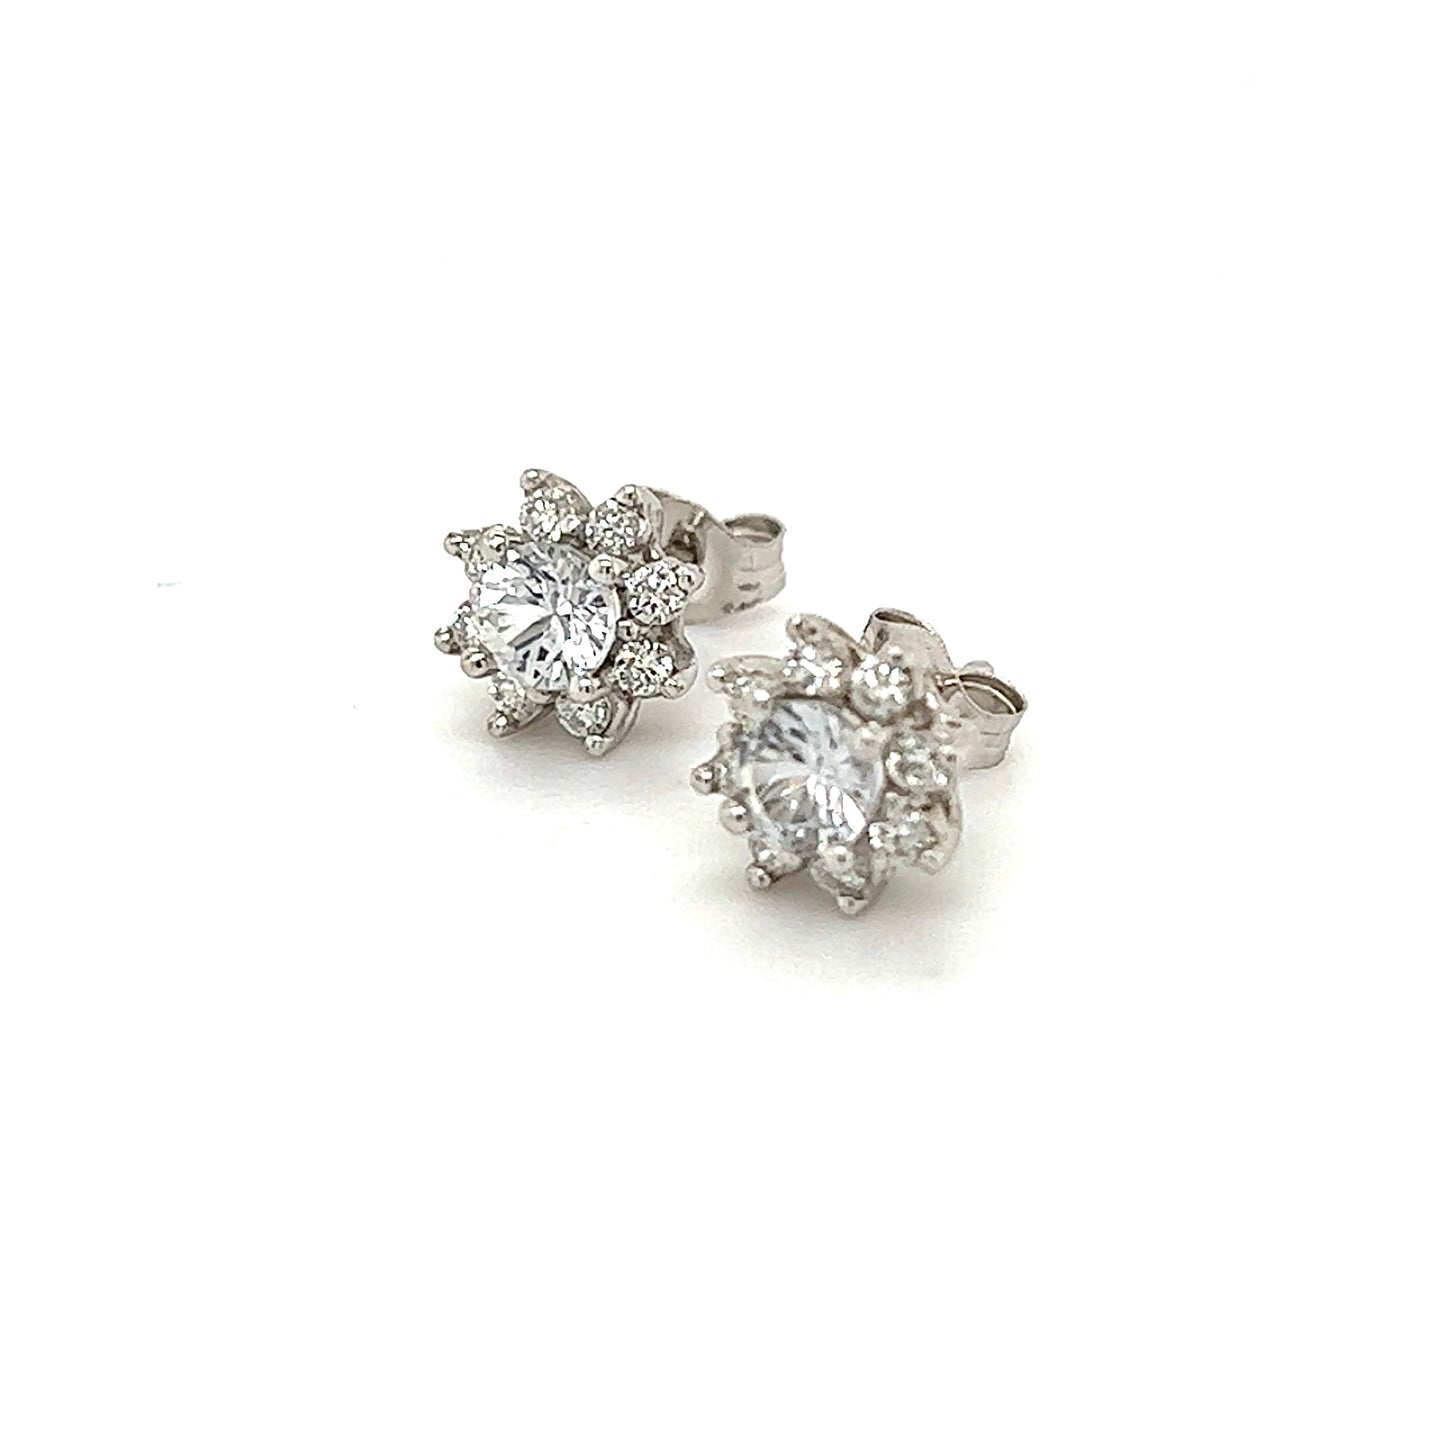 Natural Sapphire Diamond Halo Stud Earrings 14k Gold 1.02 TCW Certified $3,950 121426